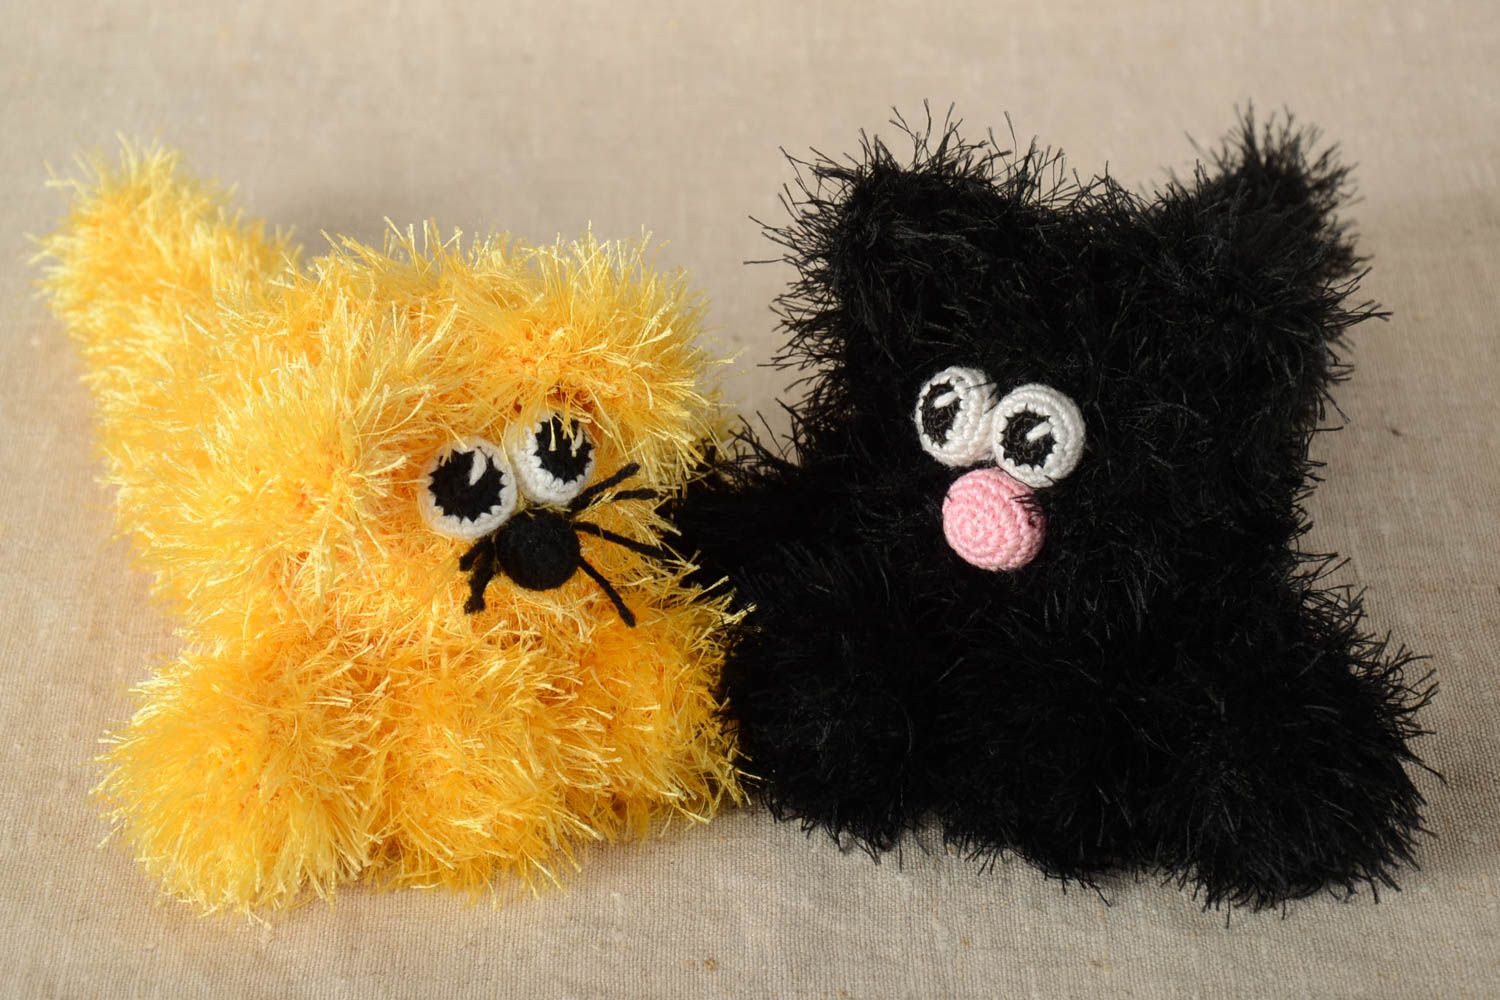 Handmade toy designer toy animal toy set of 2 items nursery decor gift ideas photo 1